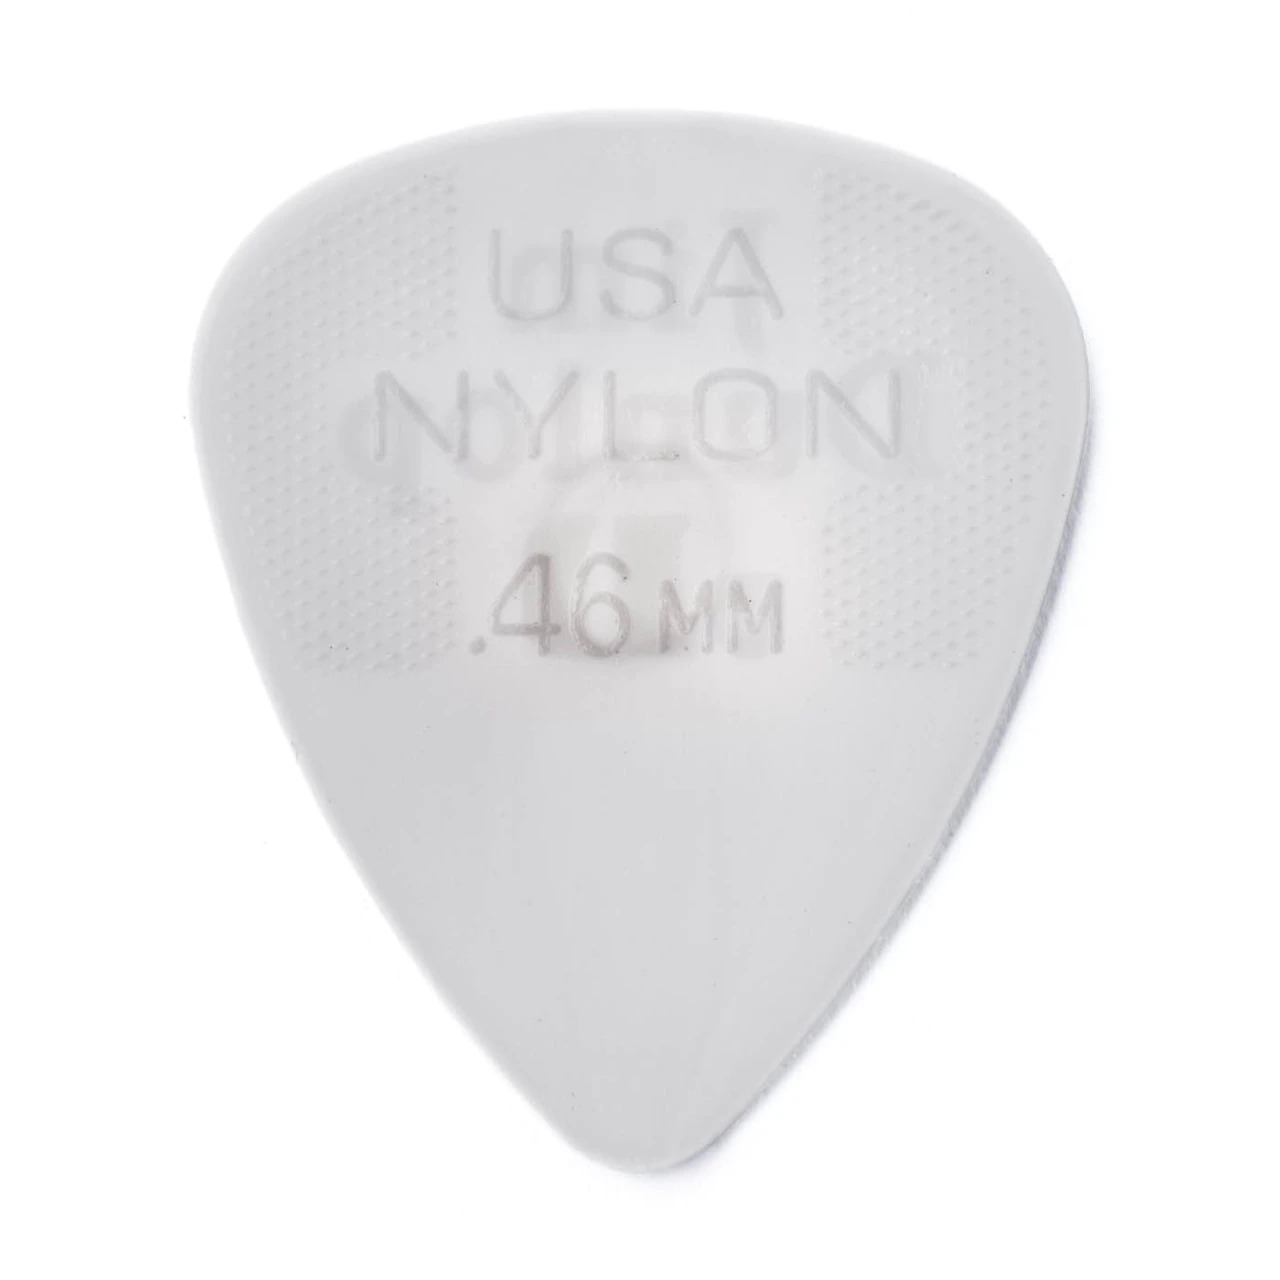 Dunlop 44P046 Nylon® Standard .46mm - 12 Pack